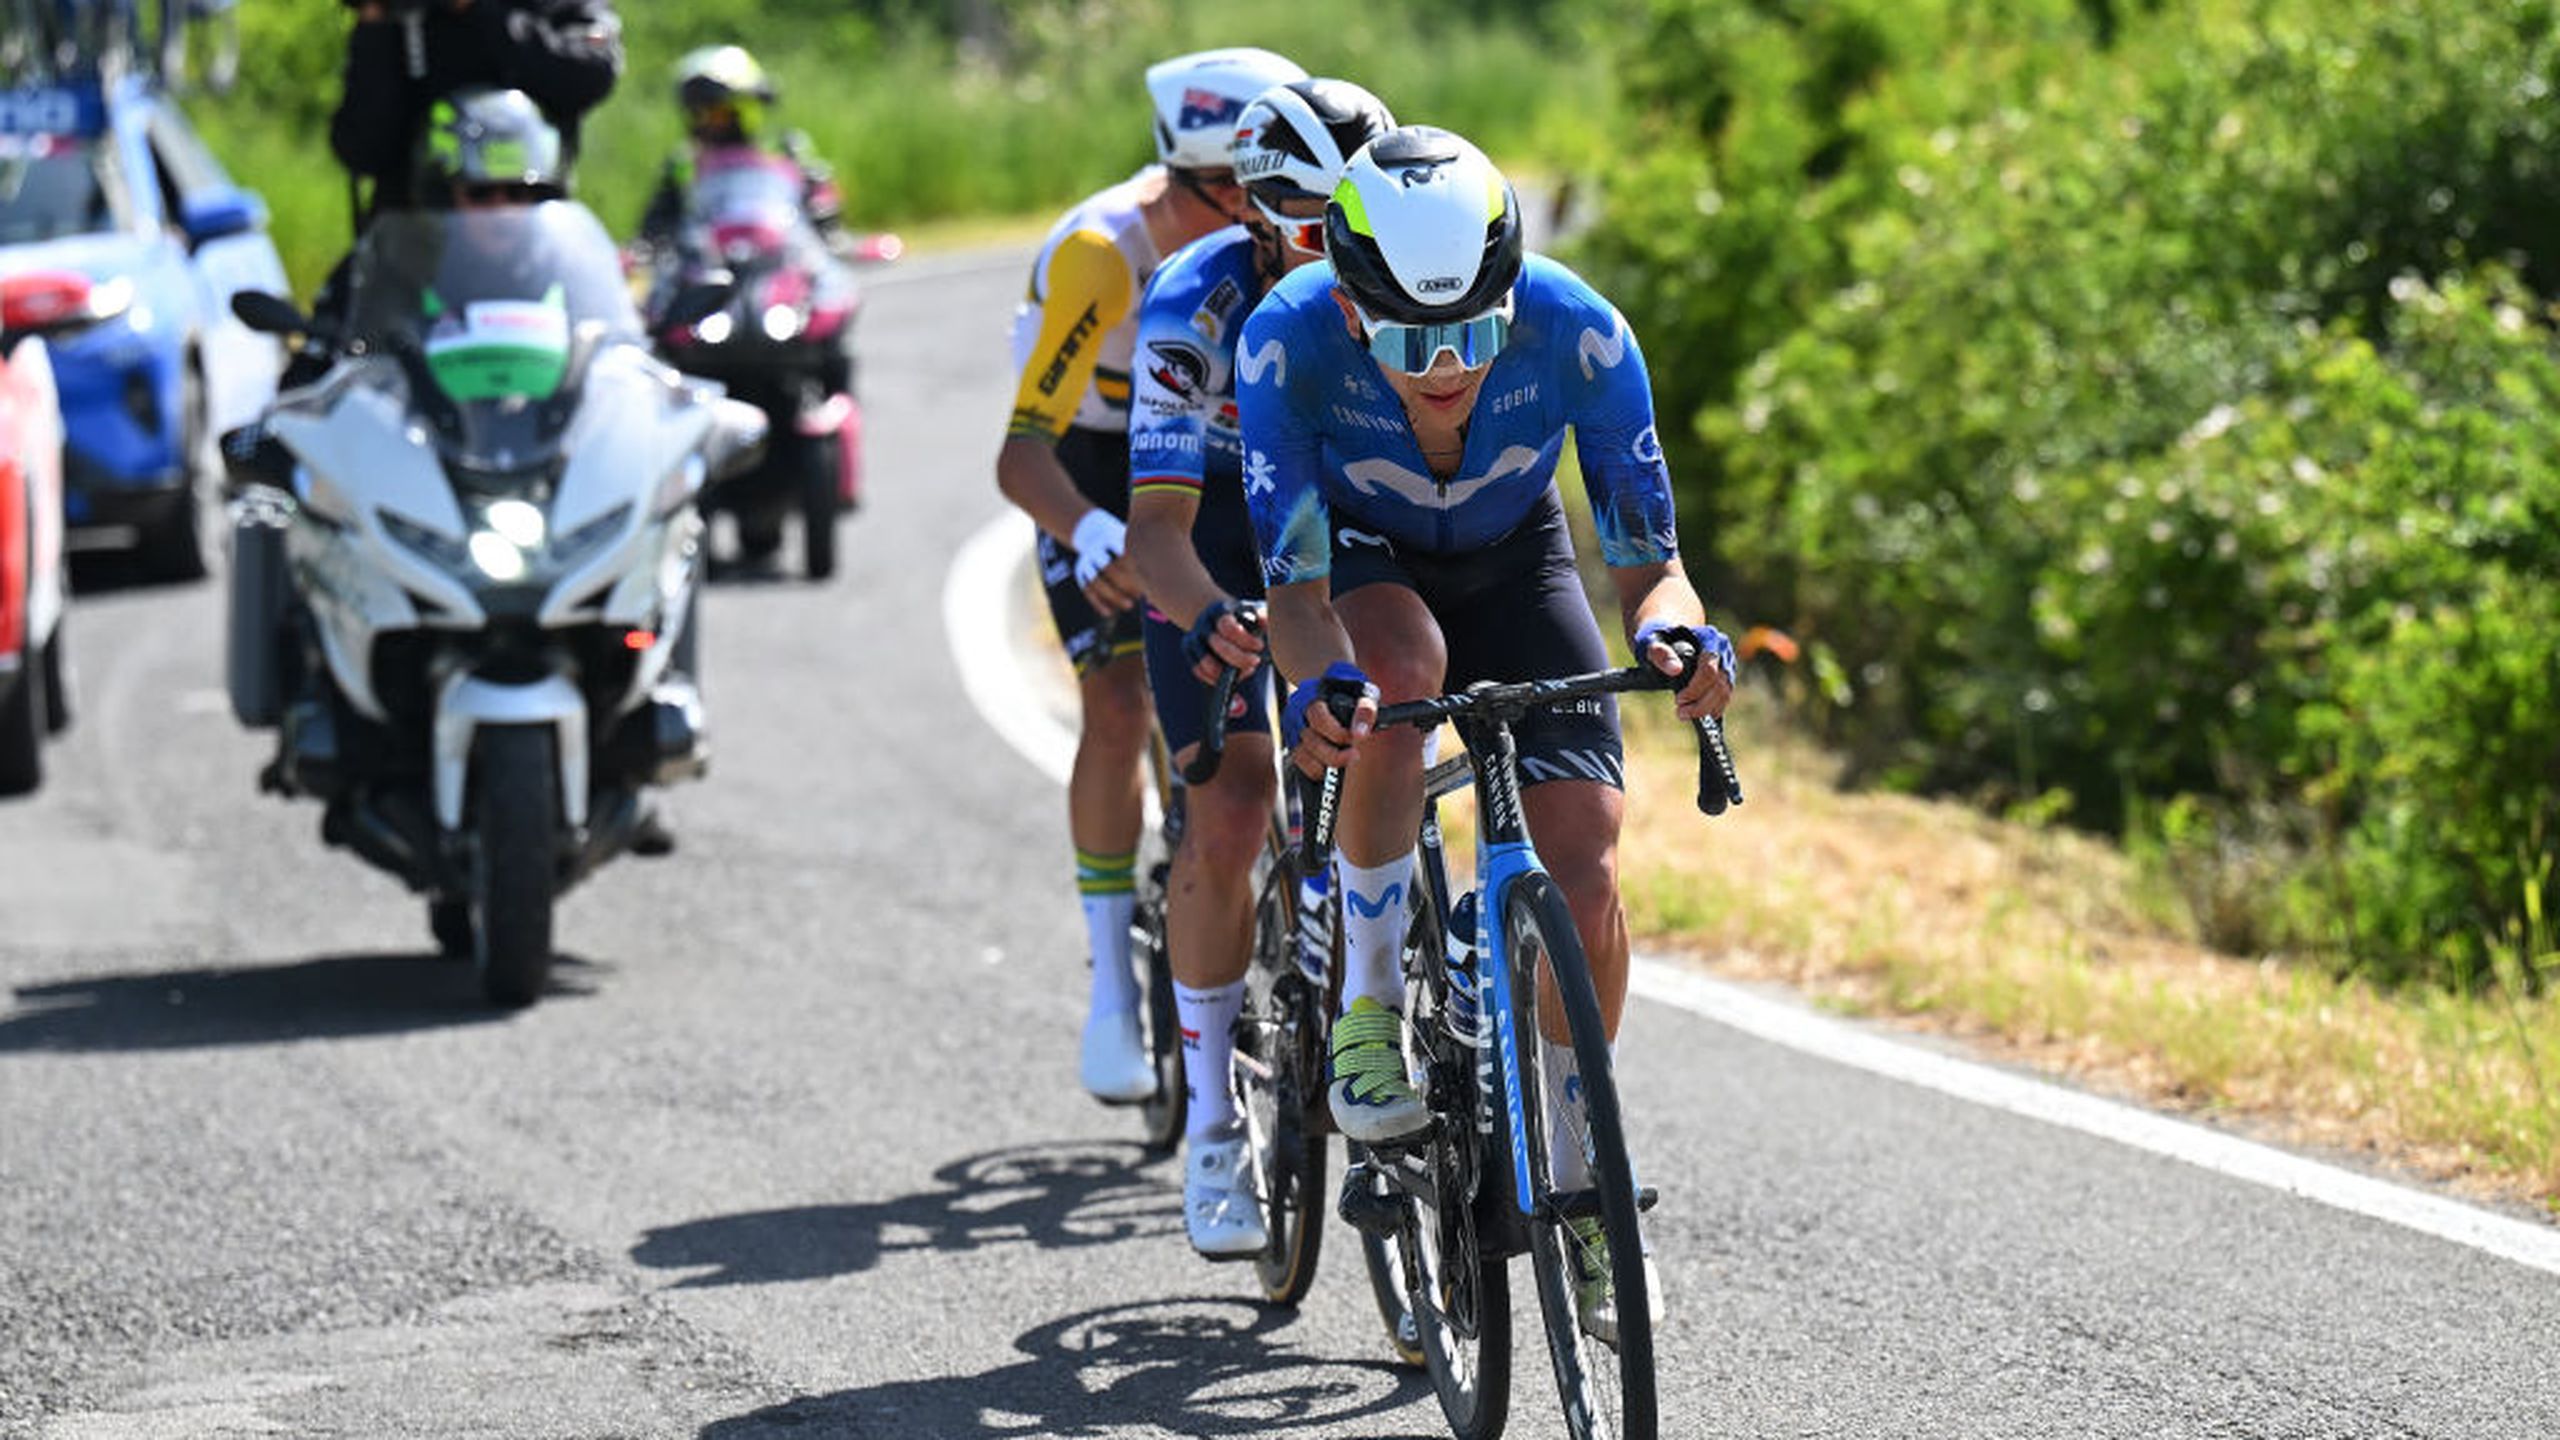 New breakaway winner – took his first stage win in the Giro d’Italia